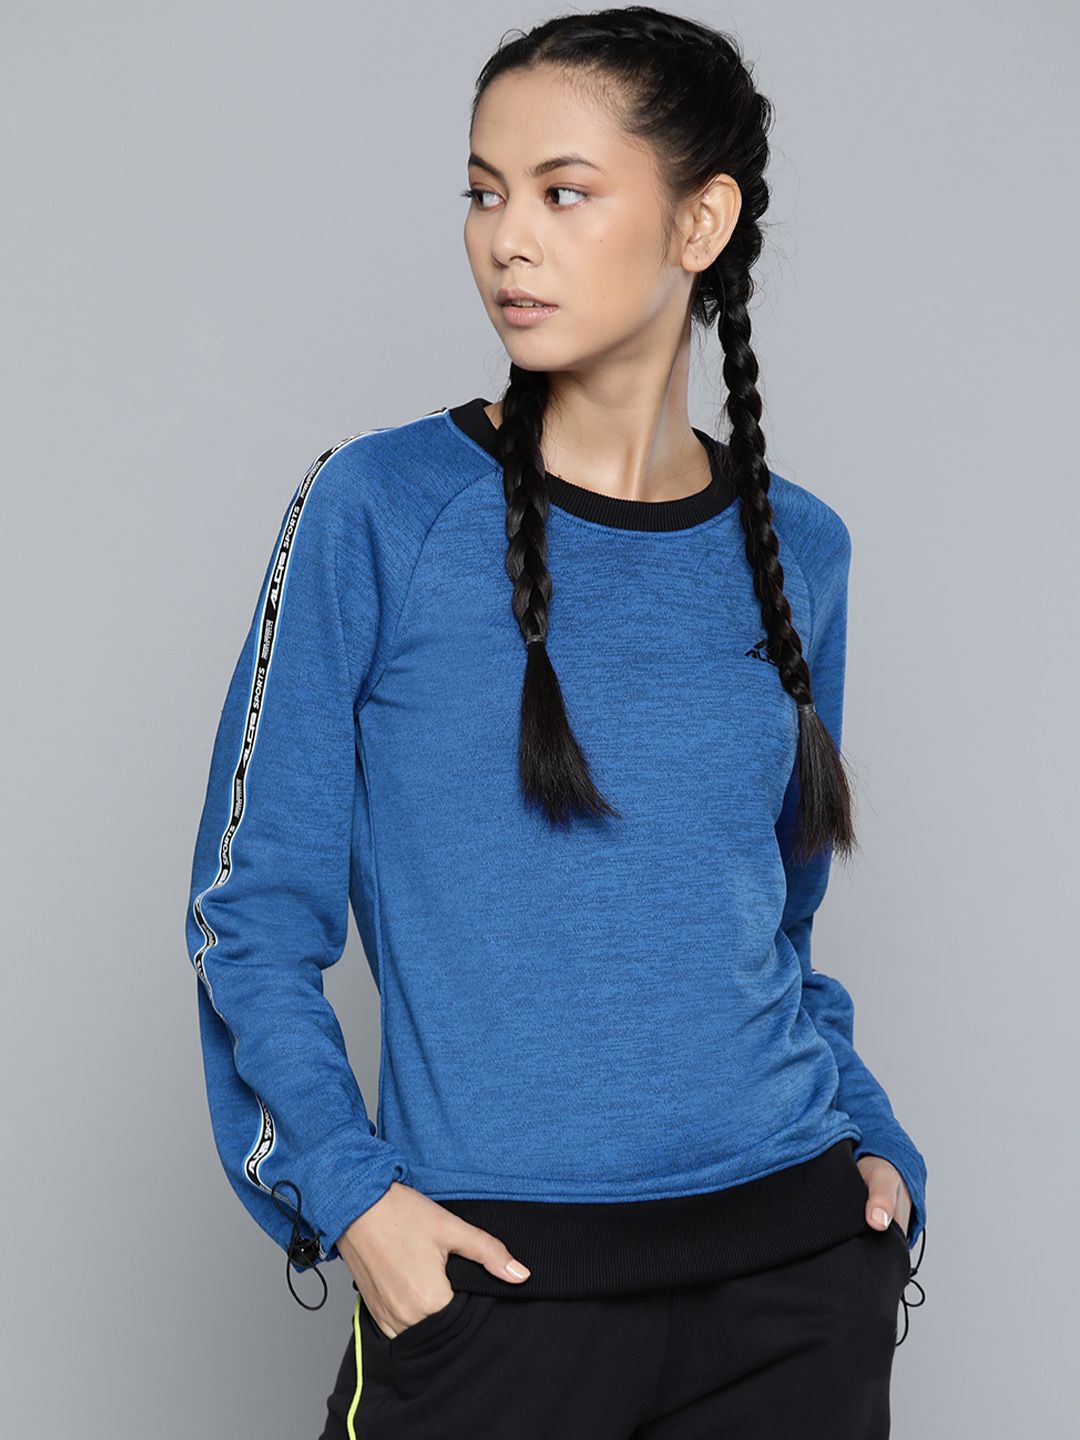 Alcis Women Blue Melange Effect Training Sweatshirt Price in India